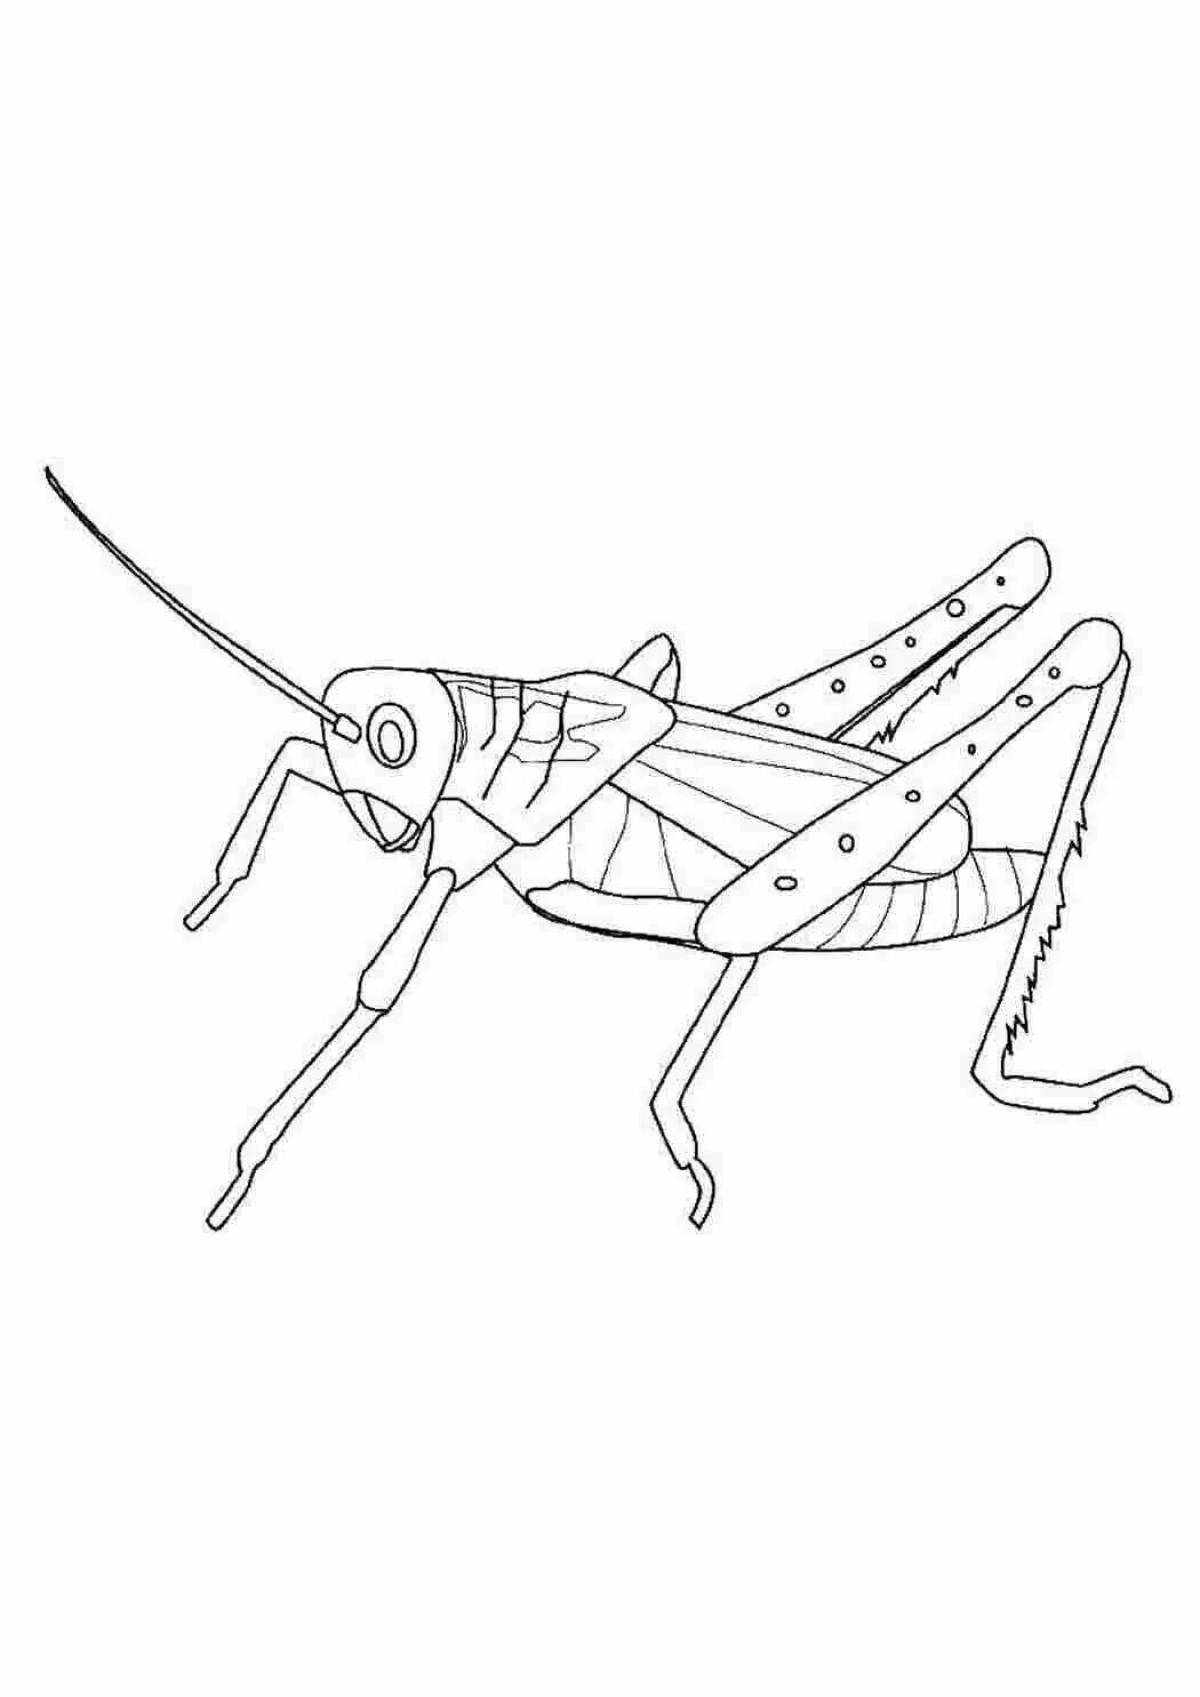 Coloring playful locust